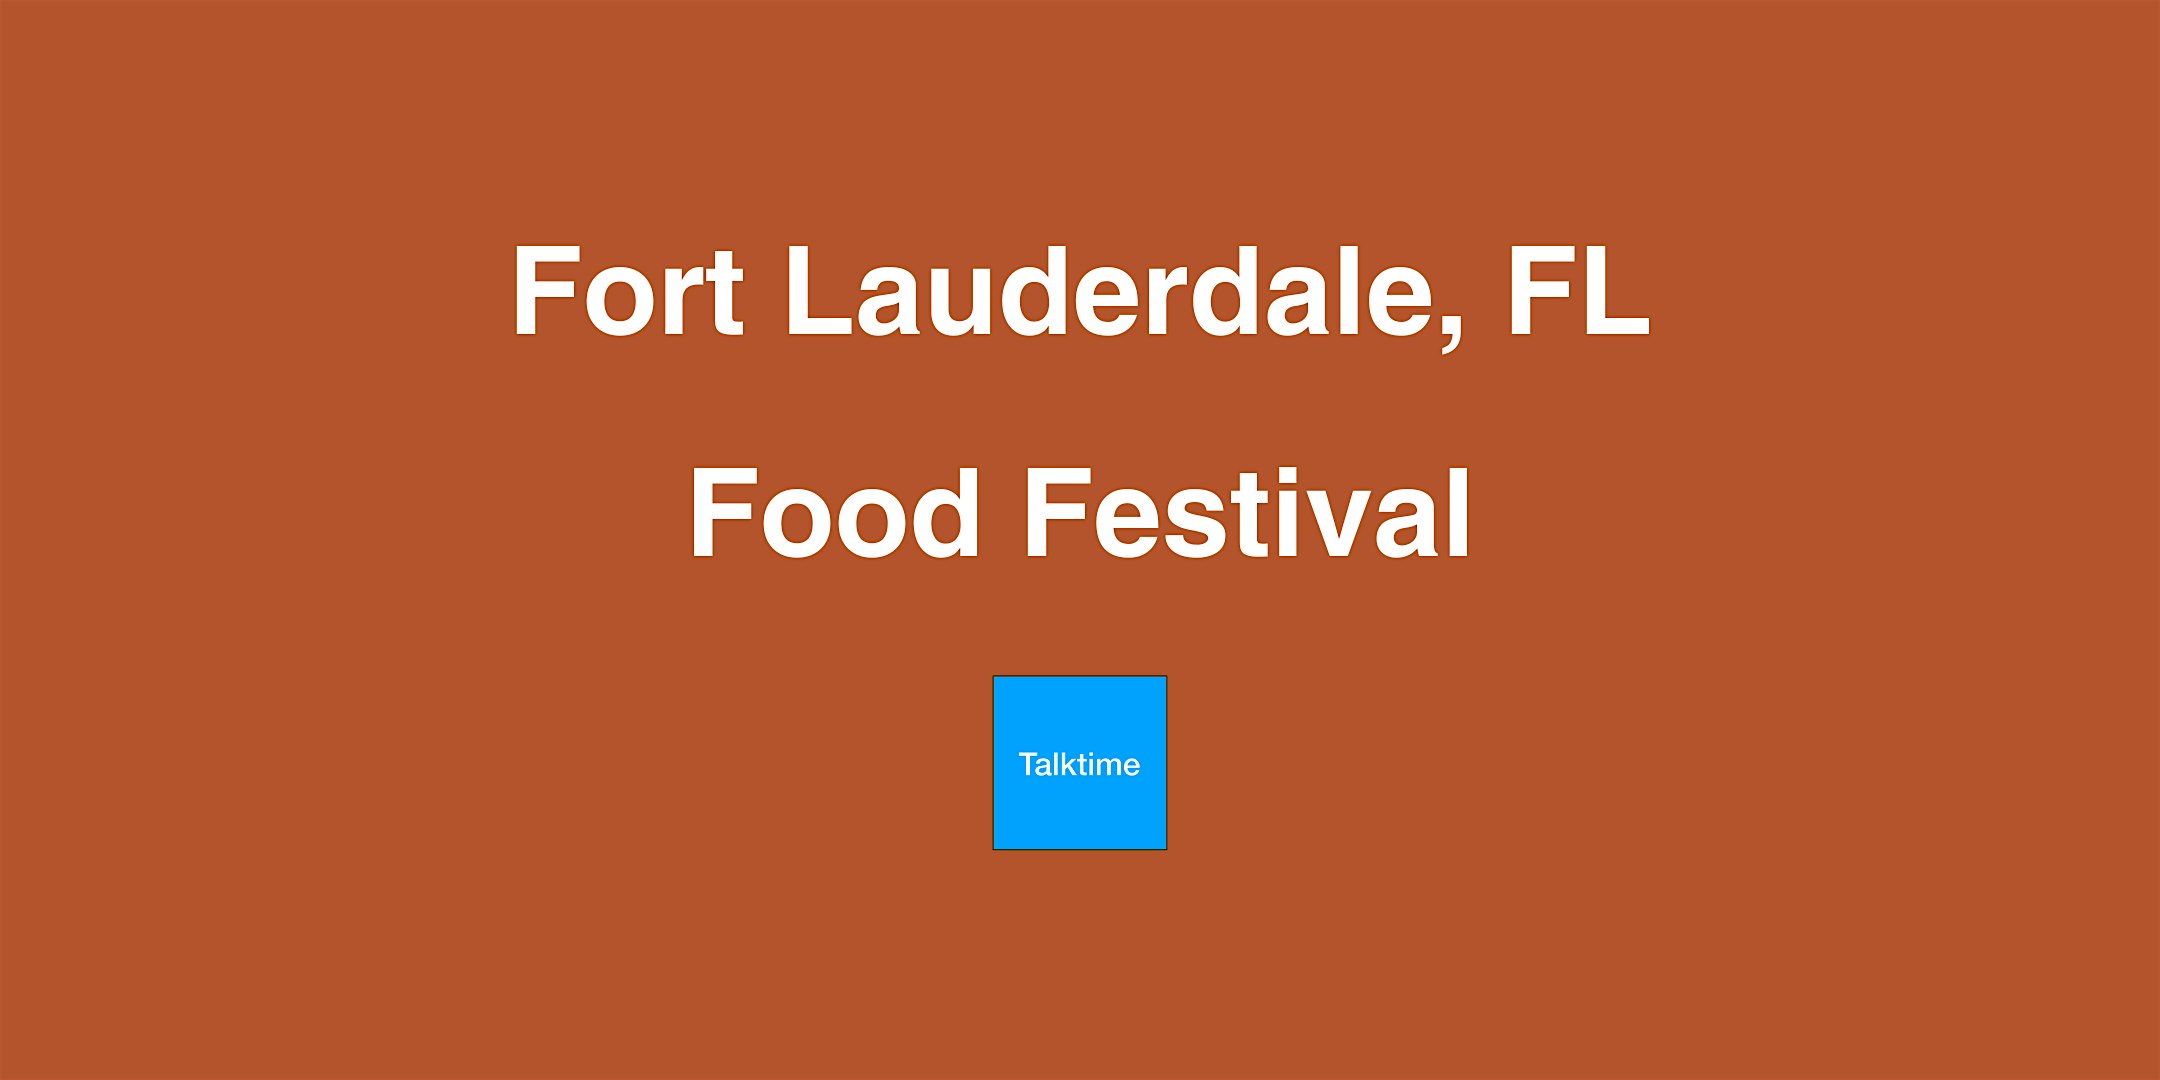 Food Festival - Fort Lauderdale